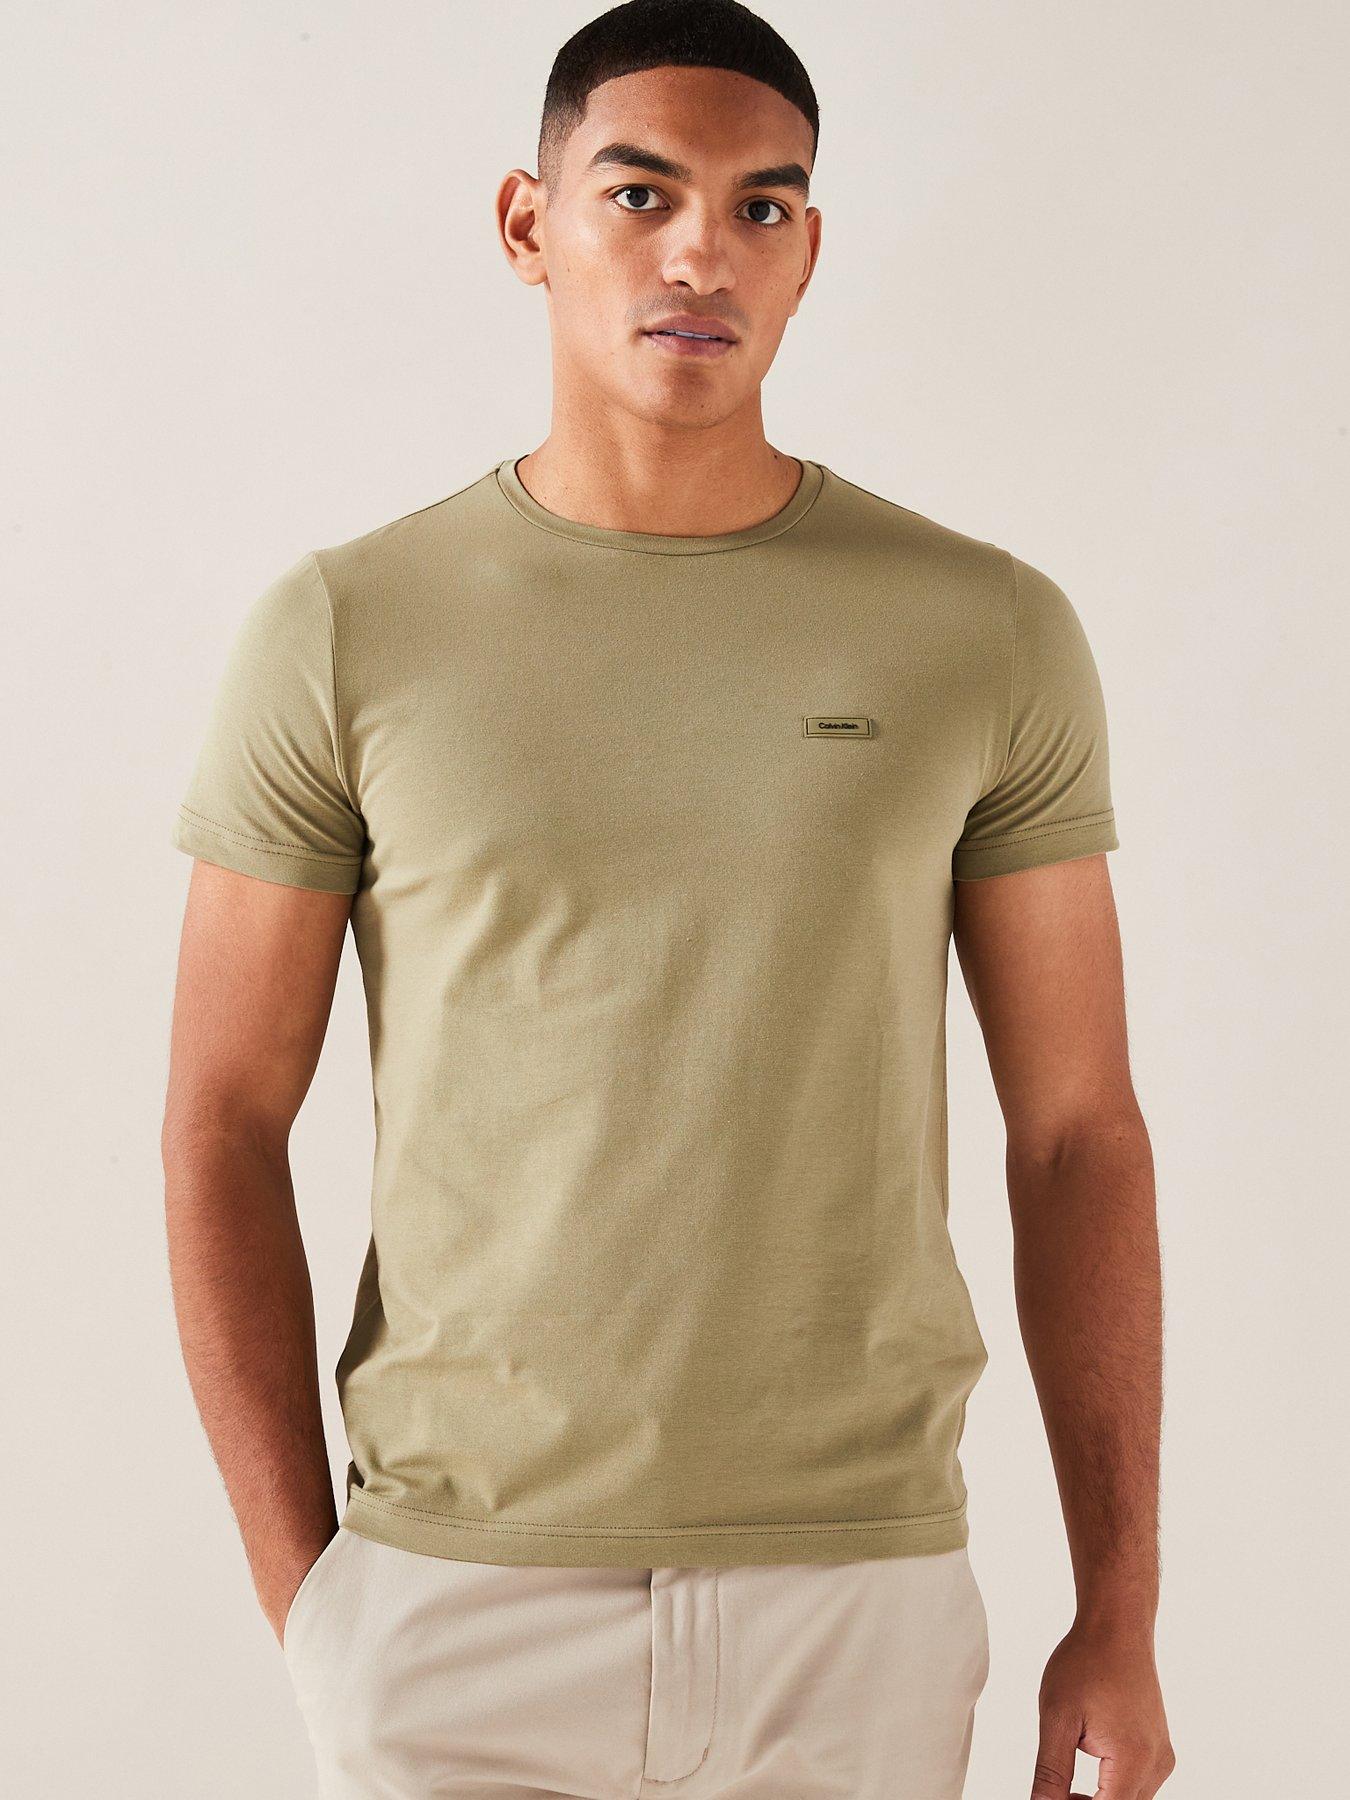 Calvin klein | T-shirts & polos | Men | Very Ireland | T-Shirts